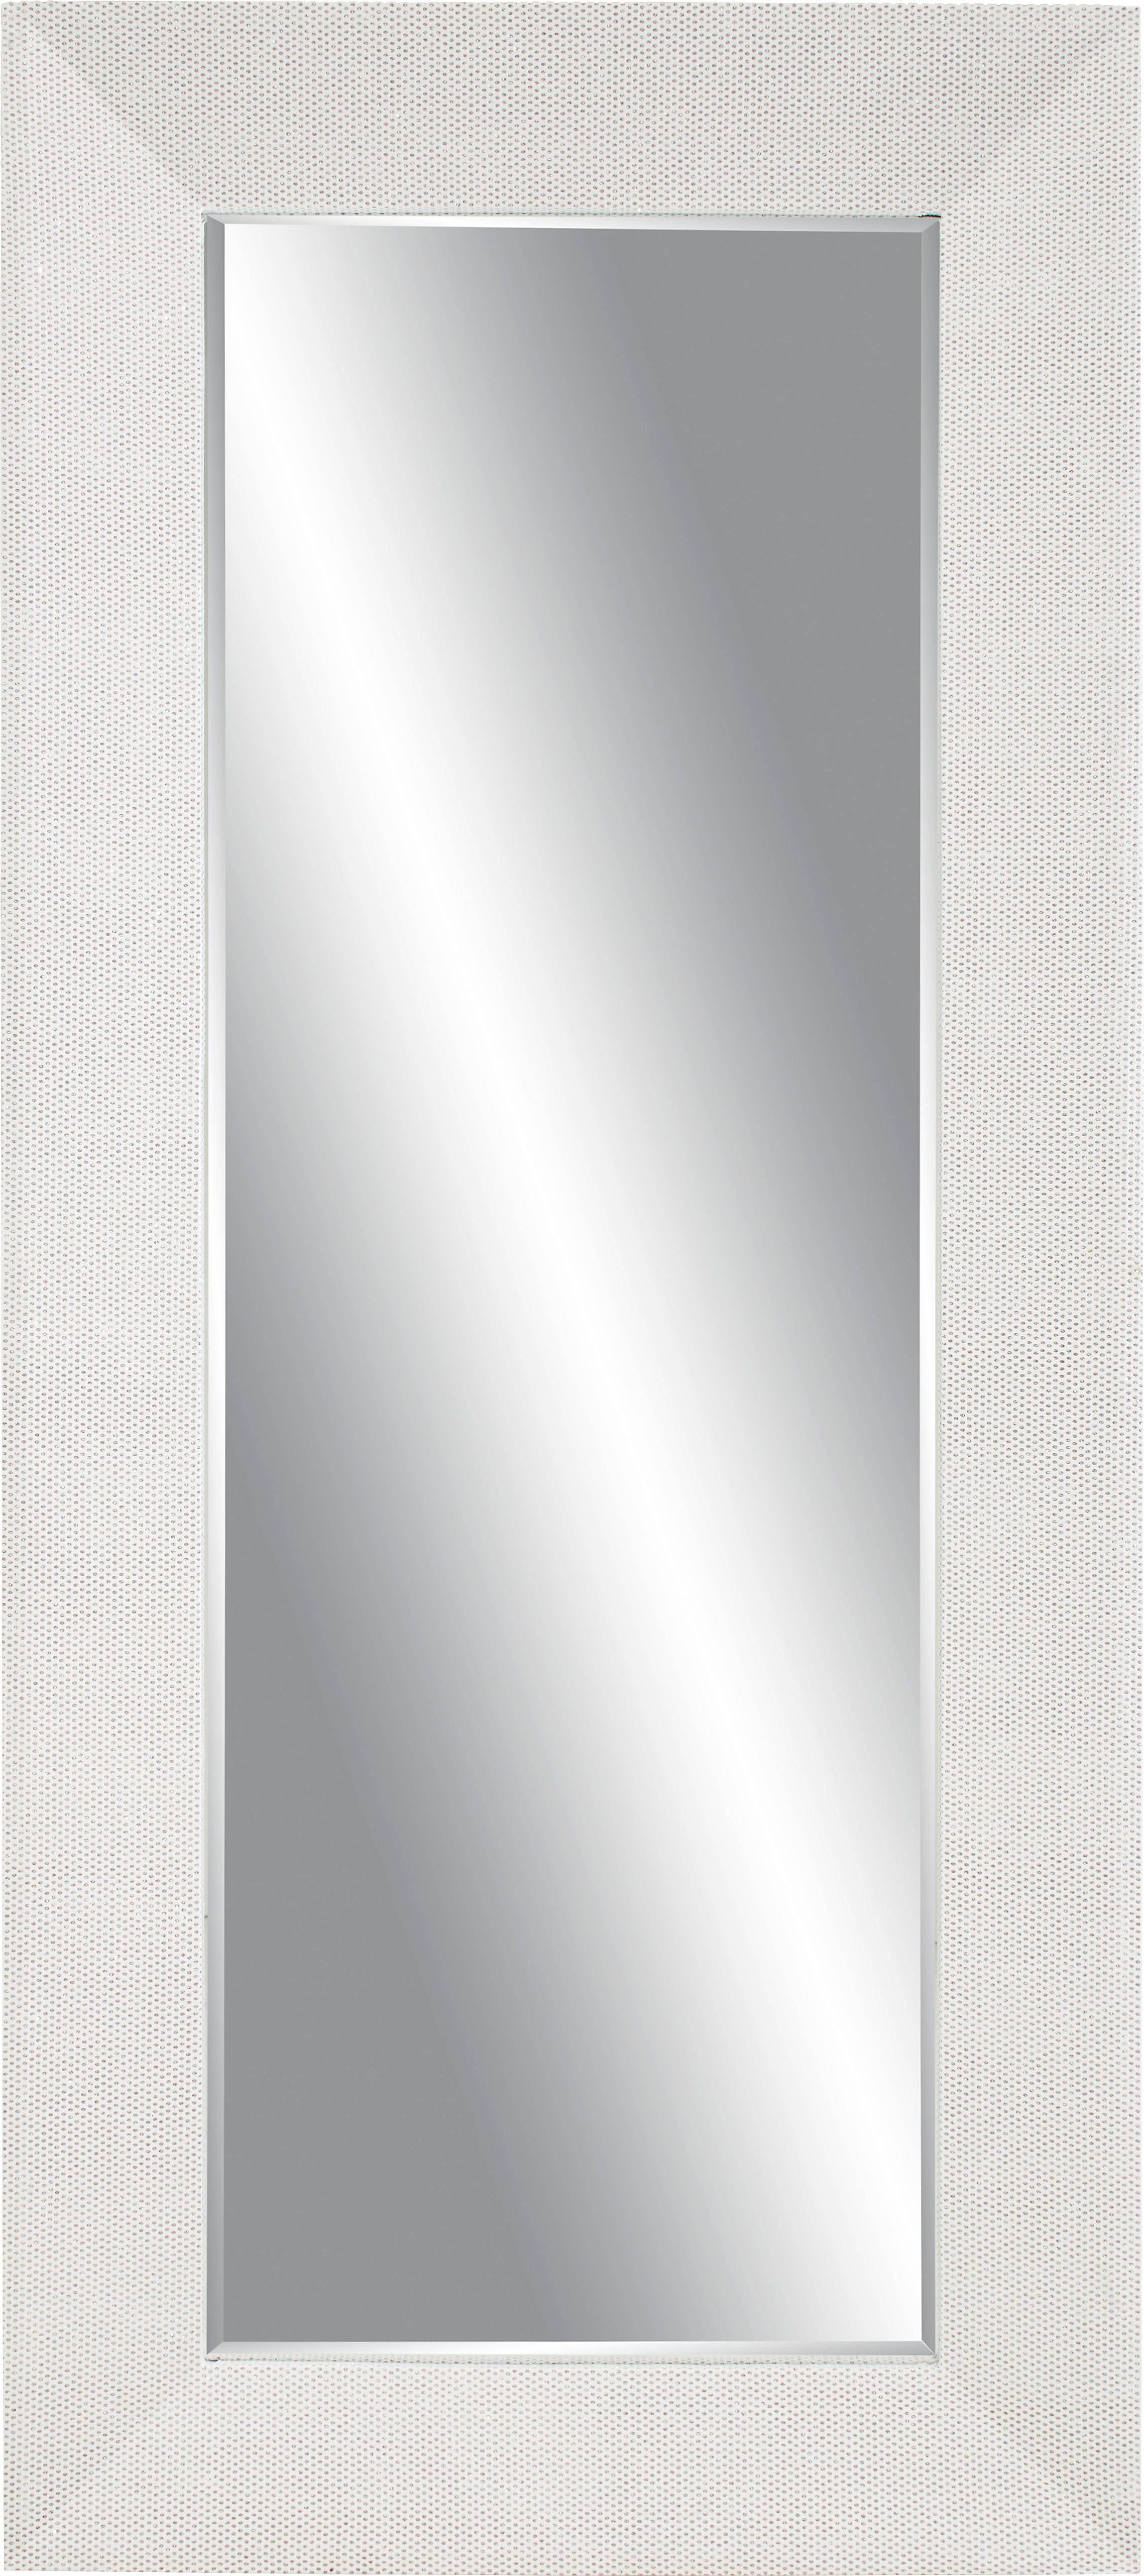 Ogledalo Glamour - srebrna, steklo/les (80/180/5cm) - Modern Living